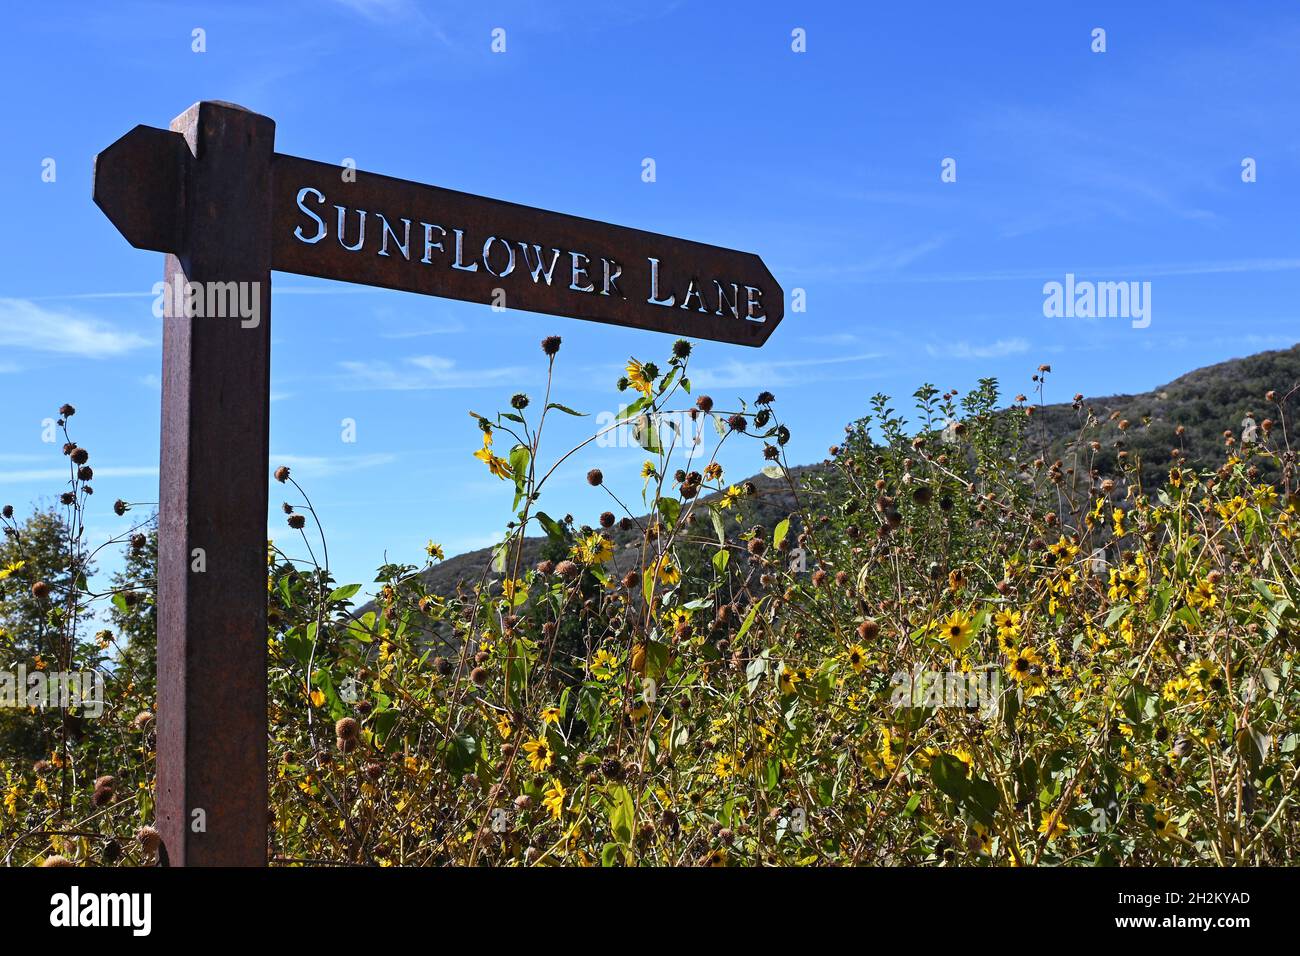 OAK GLEN, CALIFORNIA - 10 OCT 2021: Sunflower Lane sign in the Wildlands Conservancy Oak Glen Preserve in the foothills of the San Bernardino Mountain Stock Photo